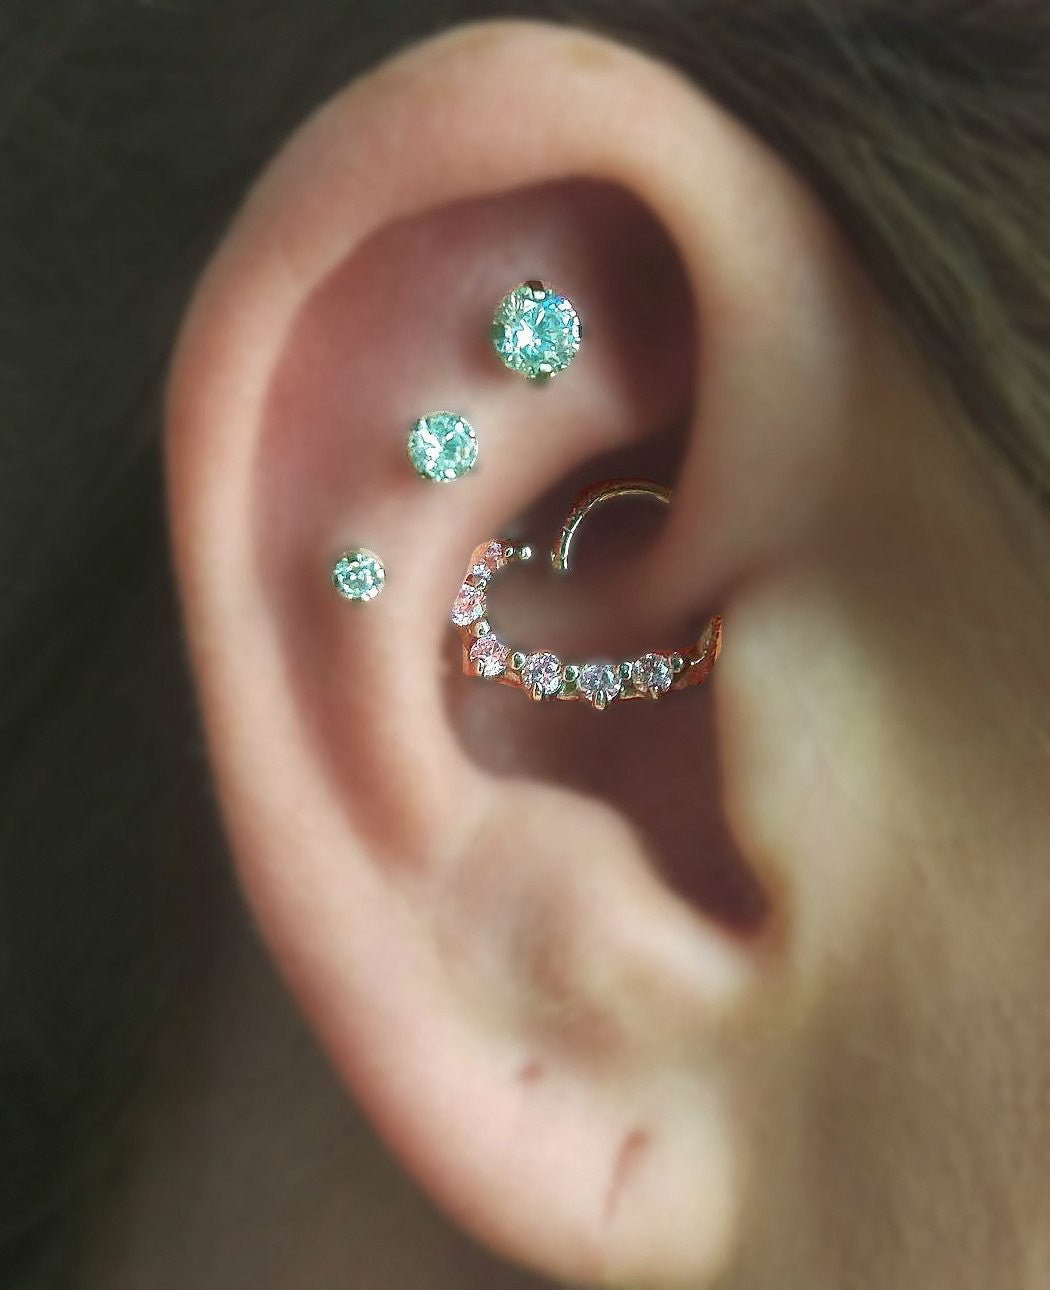 Swarovski Ear Cartilage Tragus Helix Earring Piercing